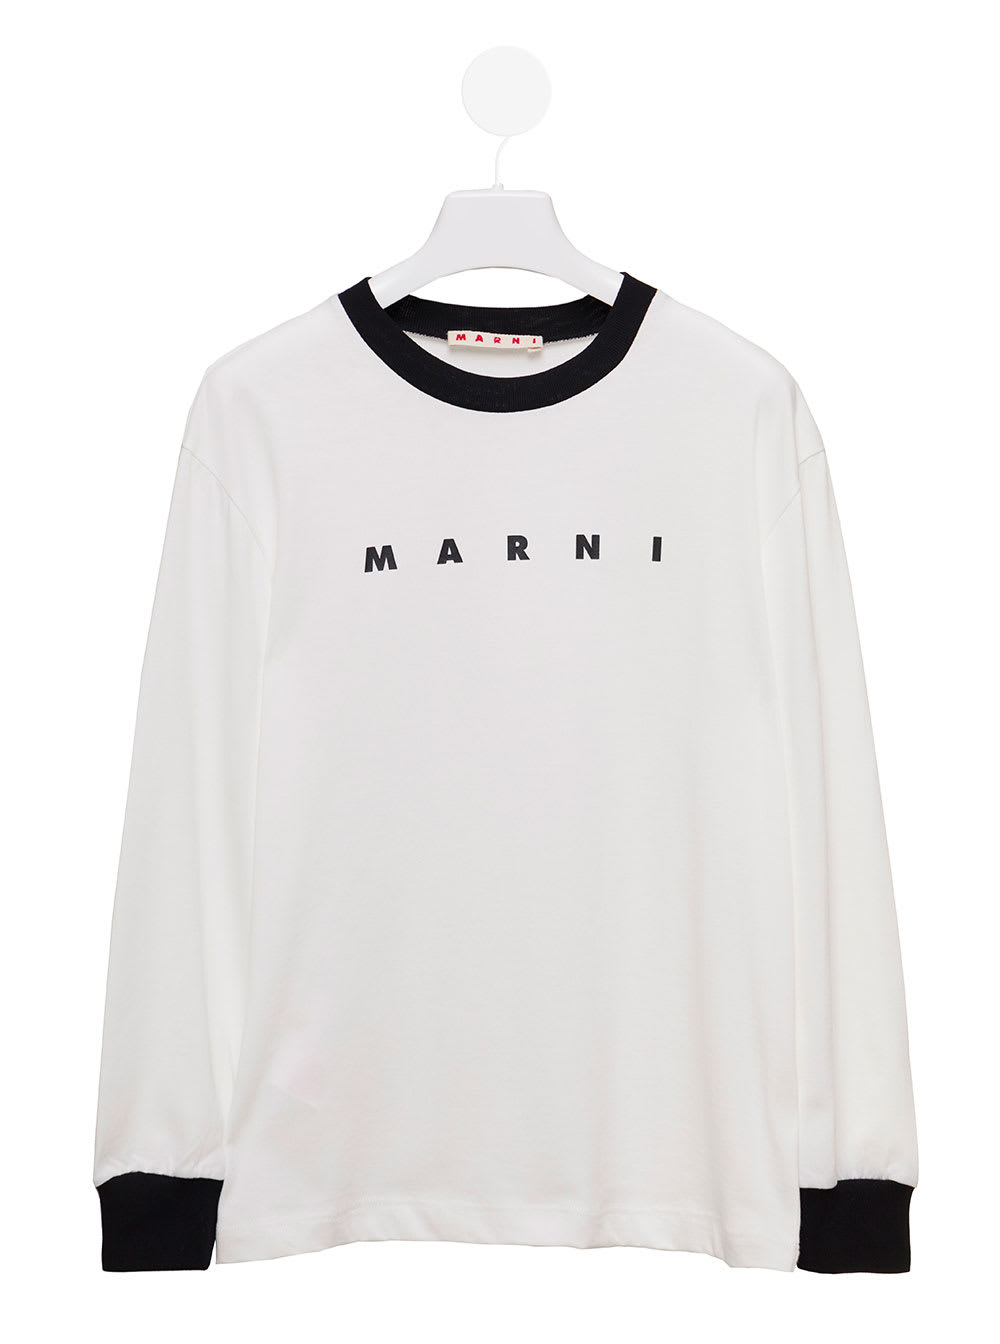 Marni Kids Girls White Long Sleeve Sweatshirt